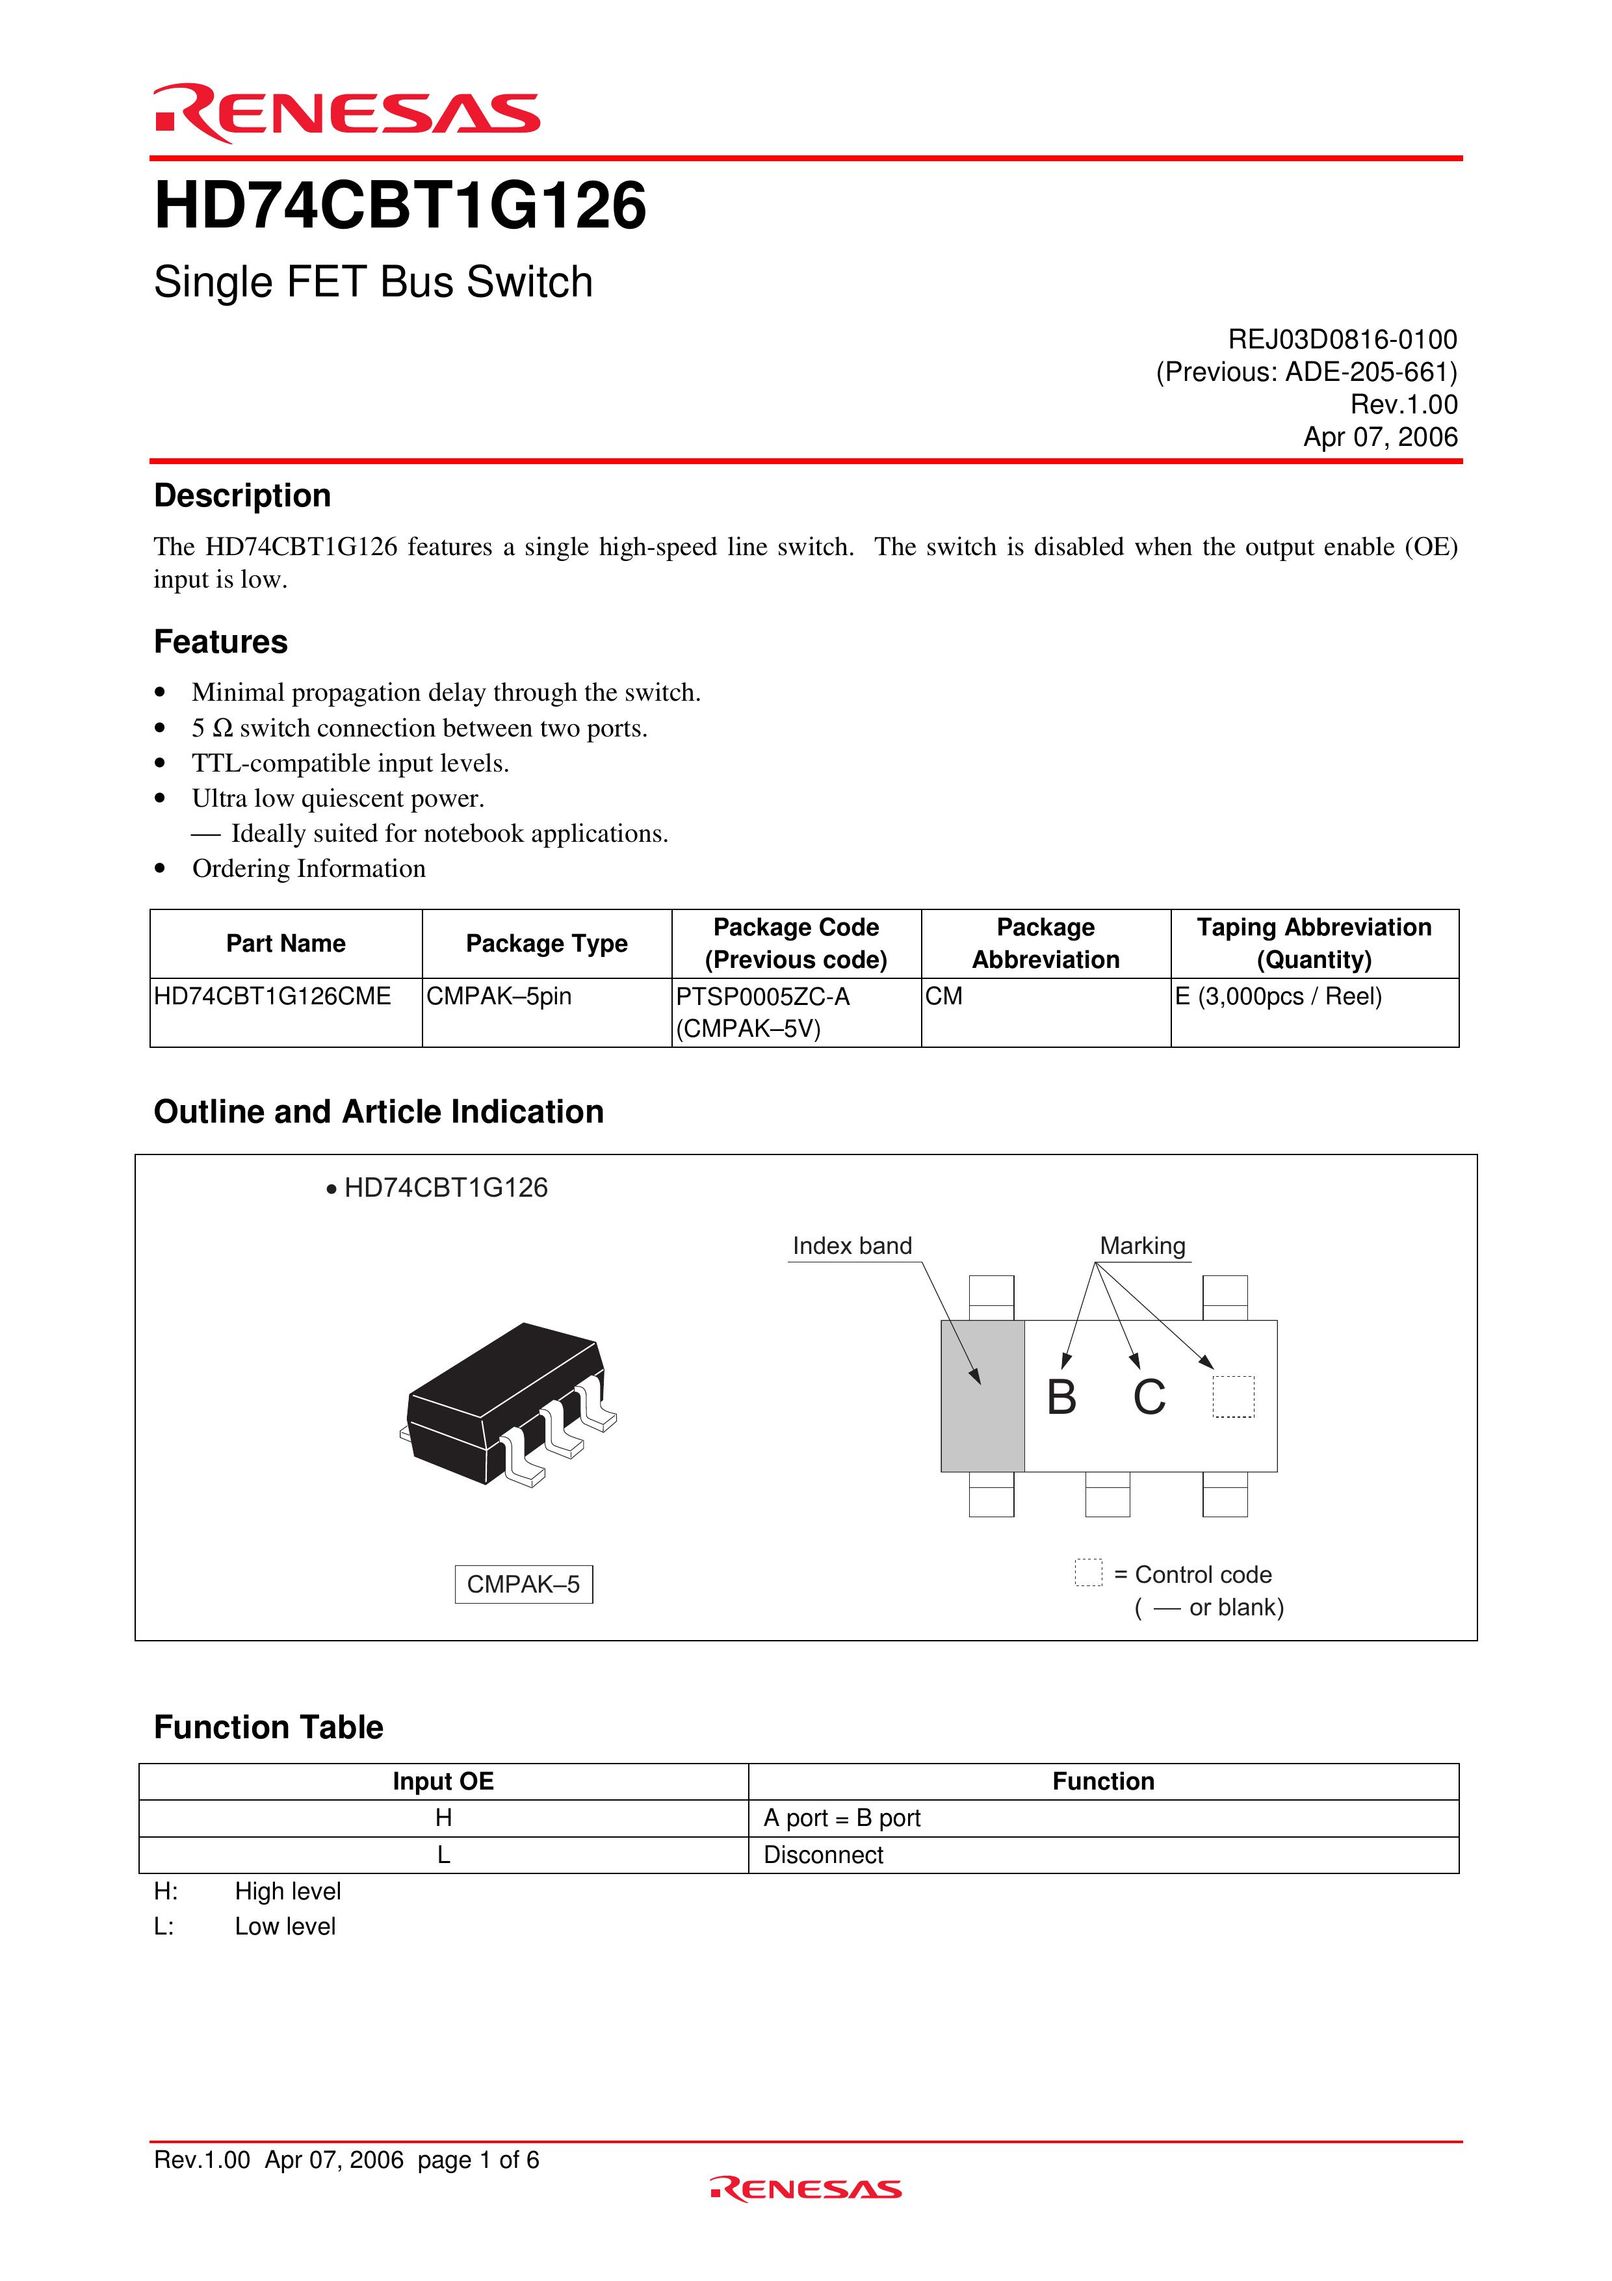 Renesas HD74CBT1G126 Switch User Manual